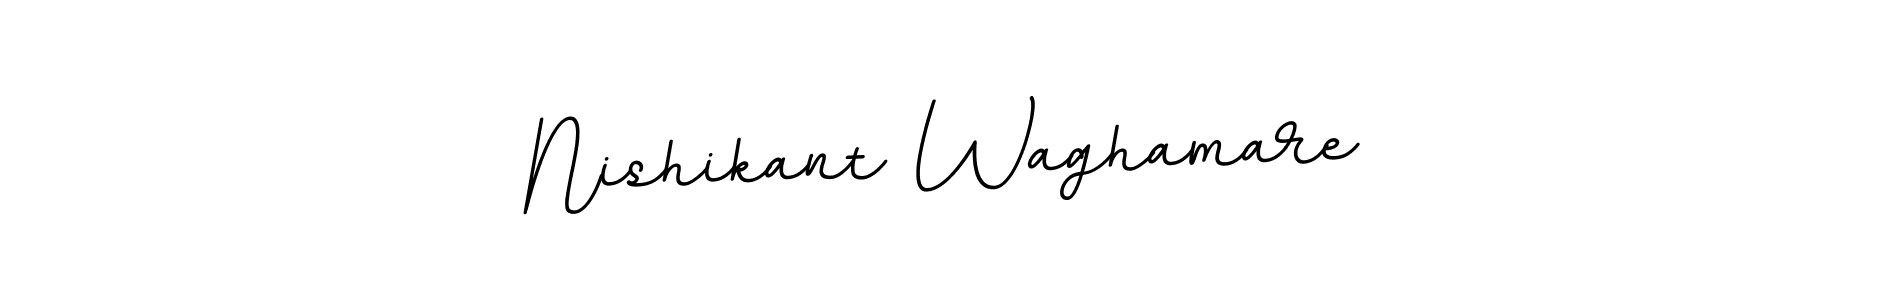 How to Draw Nishikant Waghamare signature style? BallpointsItalic-DORy9 is a latest design signature styles for name Nishikant Waghamare. Nishikant Waghamare signature style 11 images and pictures png